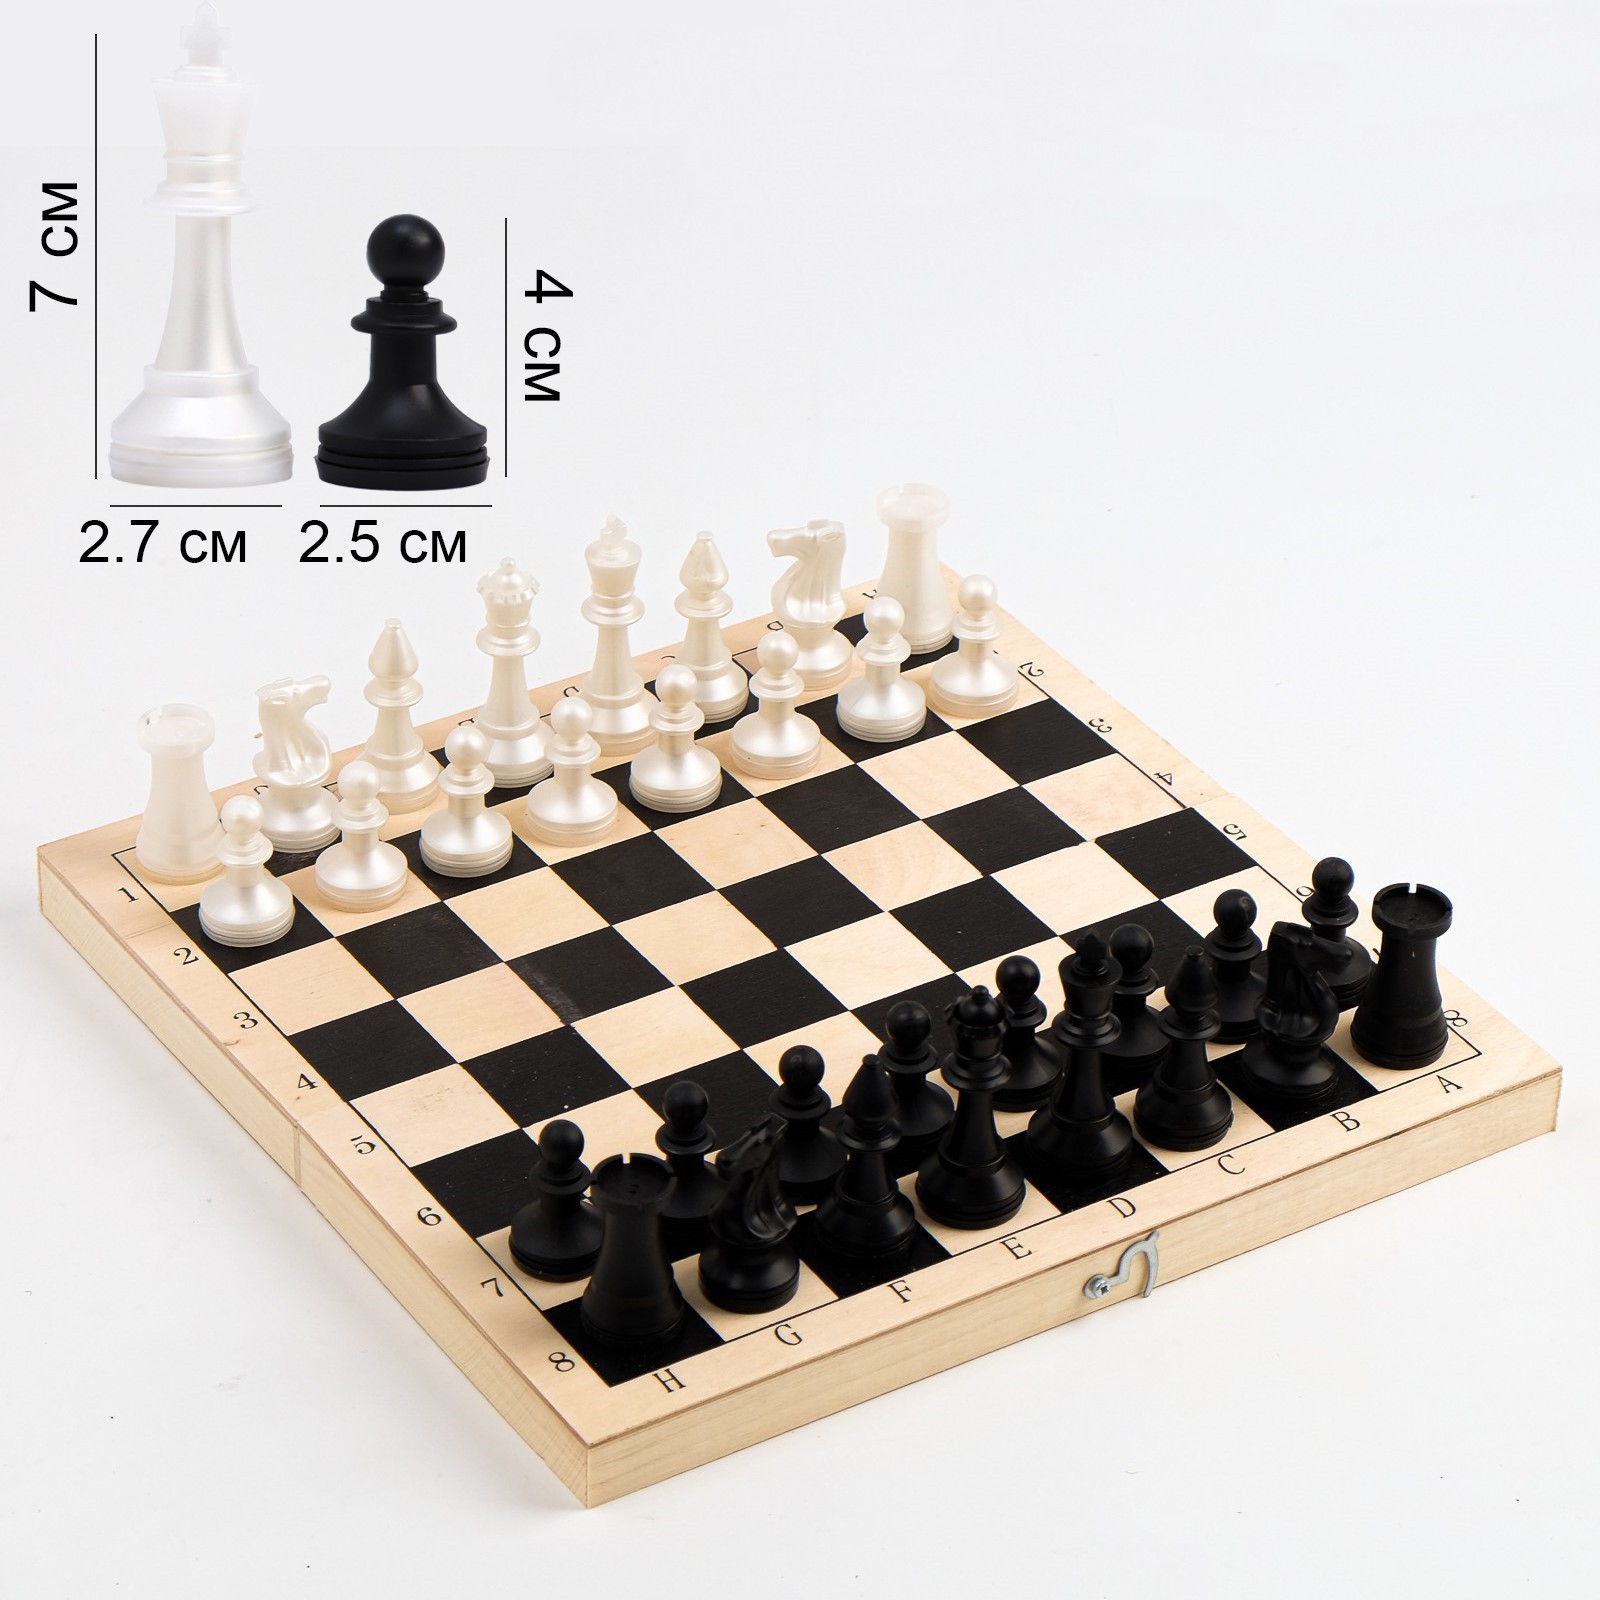 Шахматы Sima-Land «Пешка» доска дерево 29х29 см фигуры пластик король h=7.2 см пешка h=4 см - фото 1